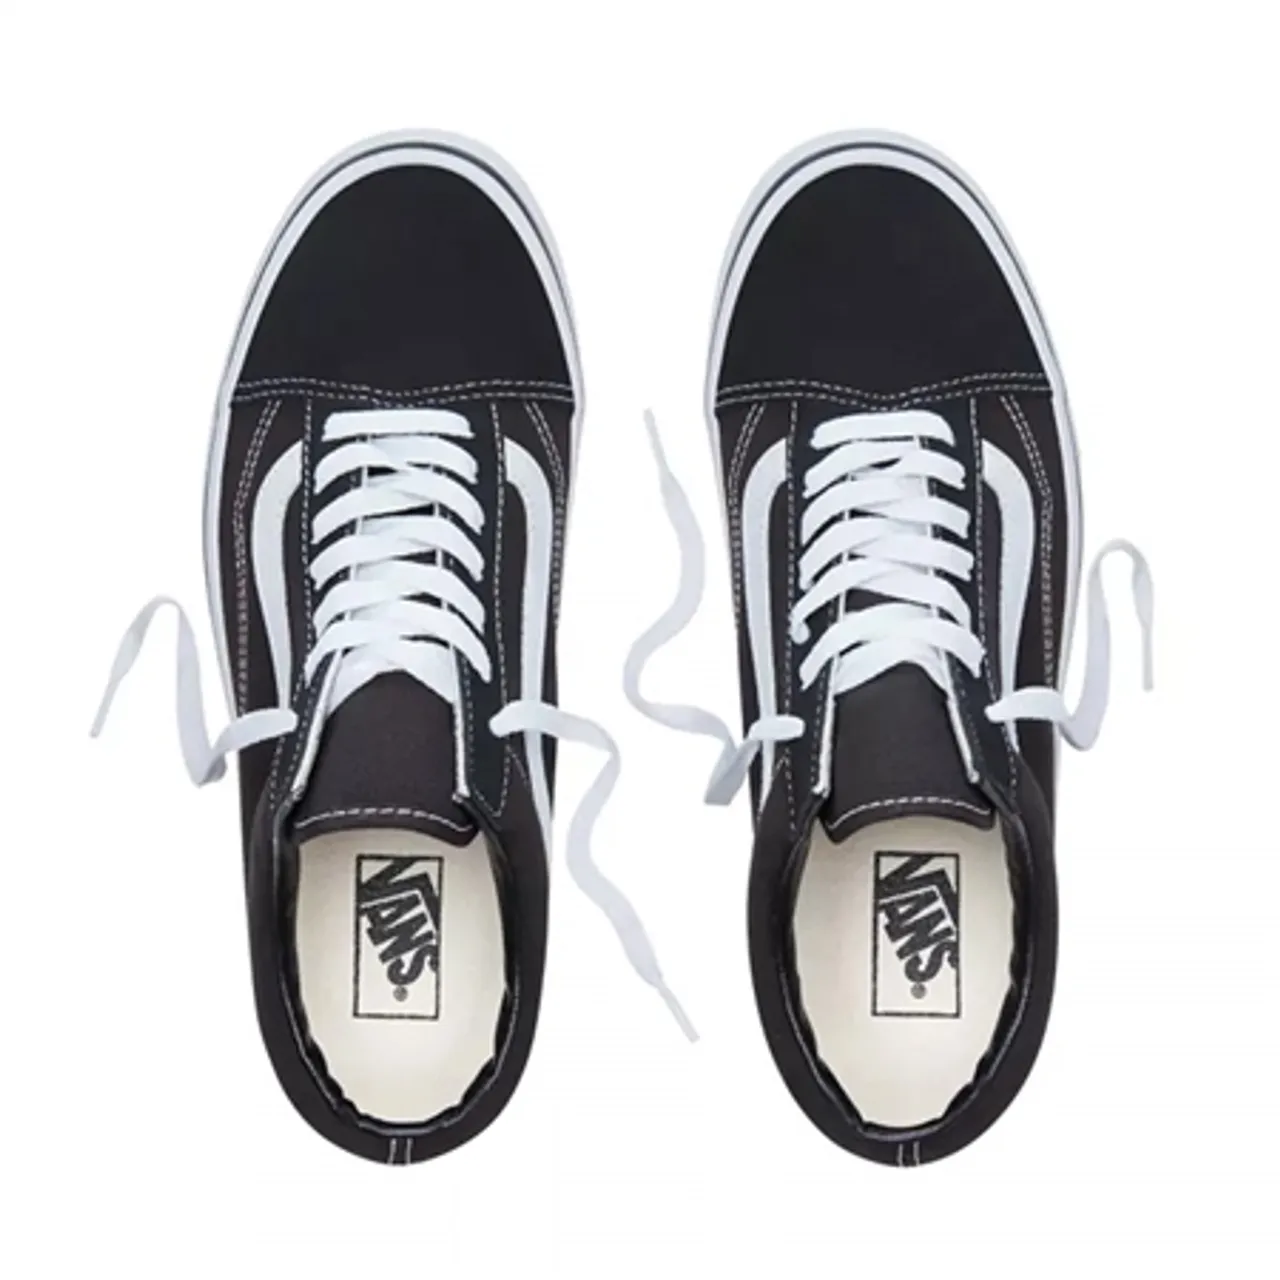 Vans Old Skool Mens Shoes - Black & White - UK 7 (EU 40.5)